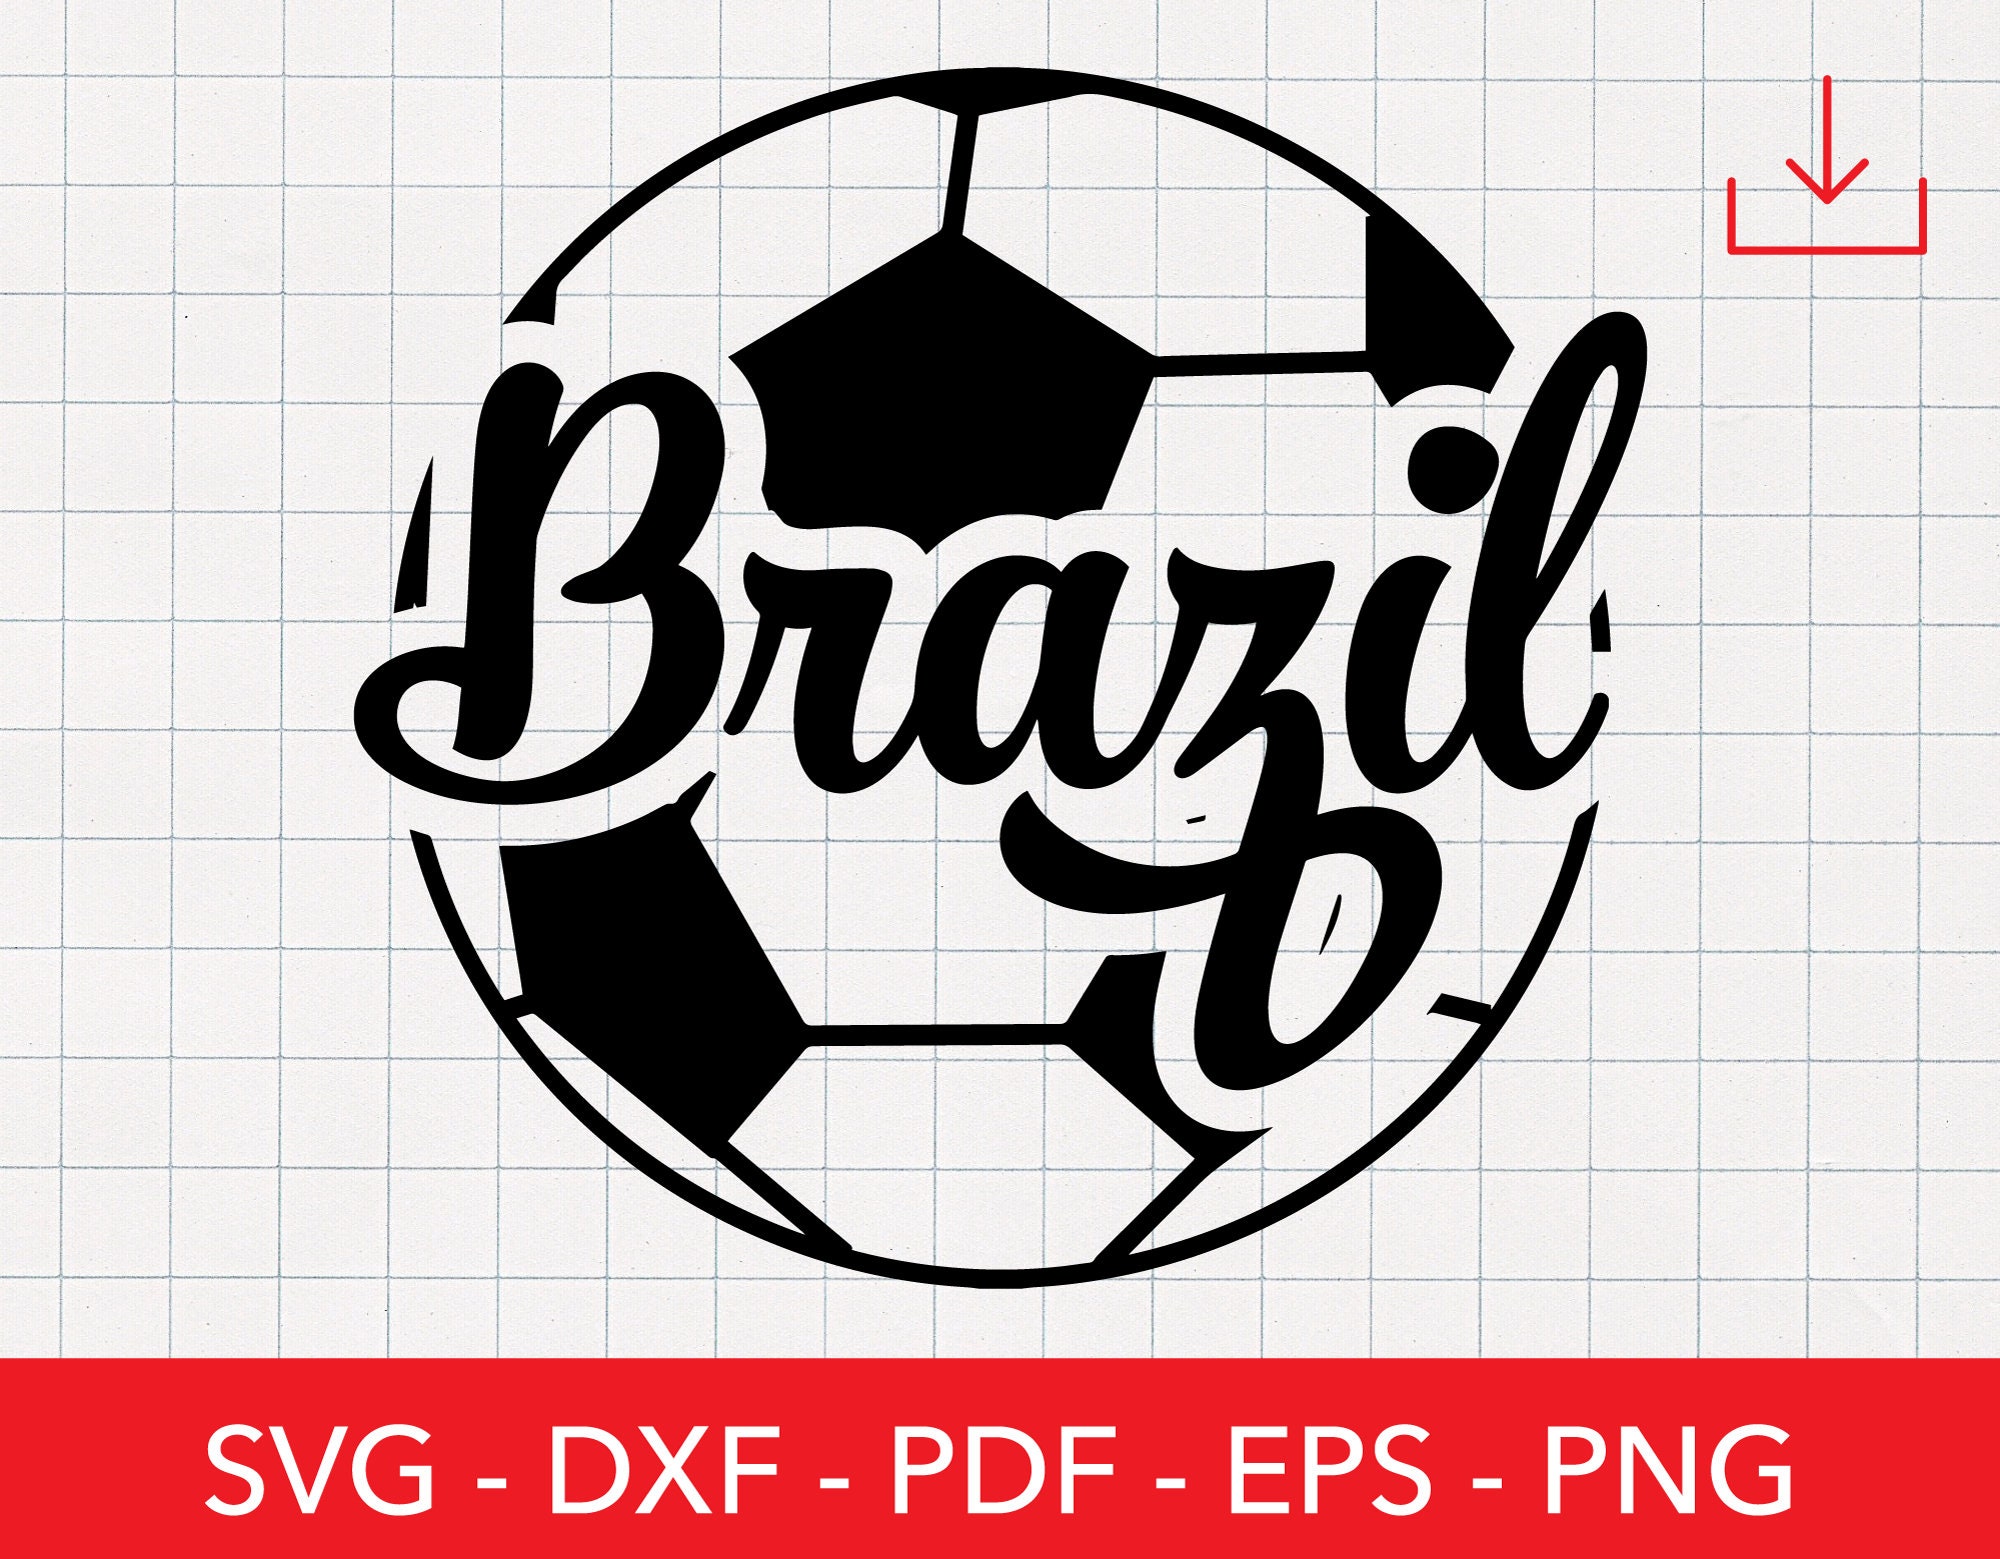 Liga Portuguesa de Futebol Logo PNG Transparent & SVG Vector - Freebie  Supply